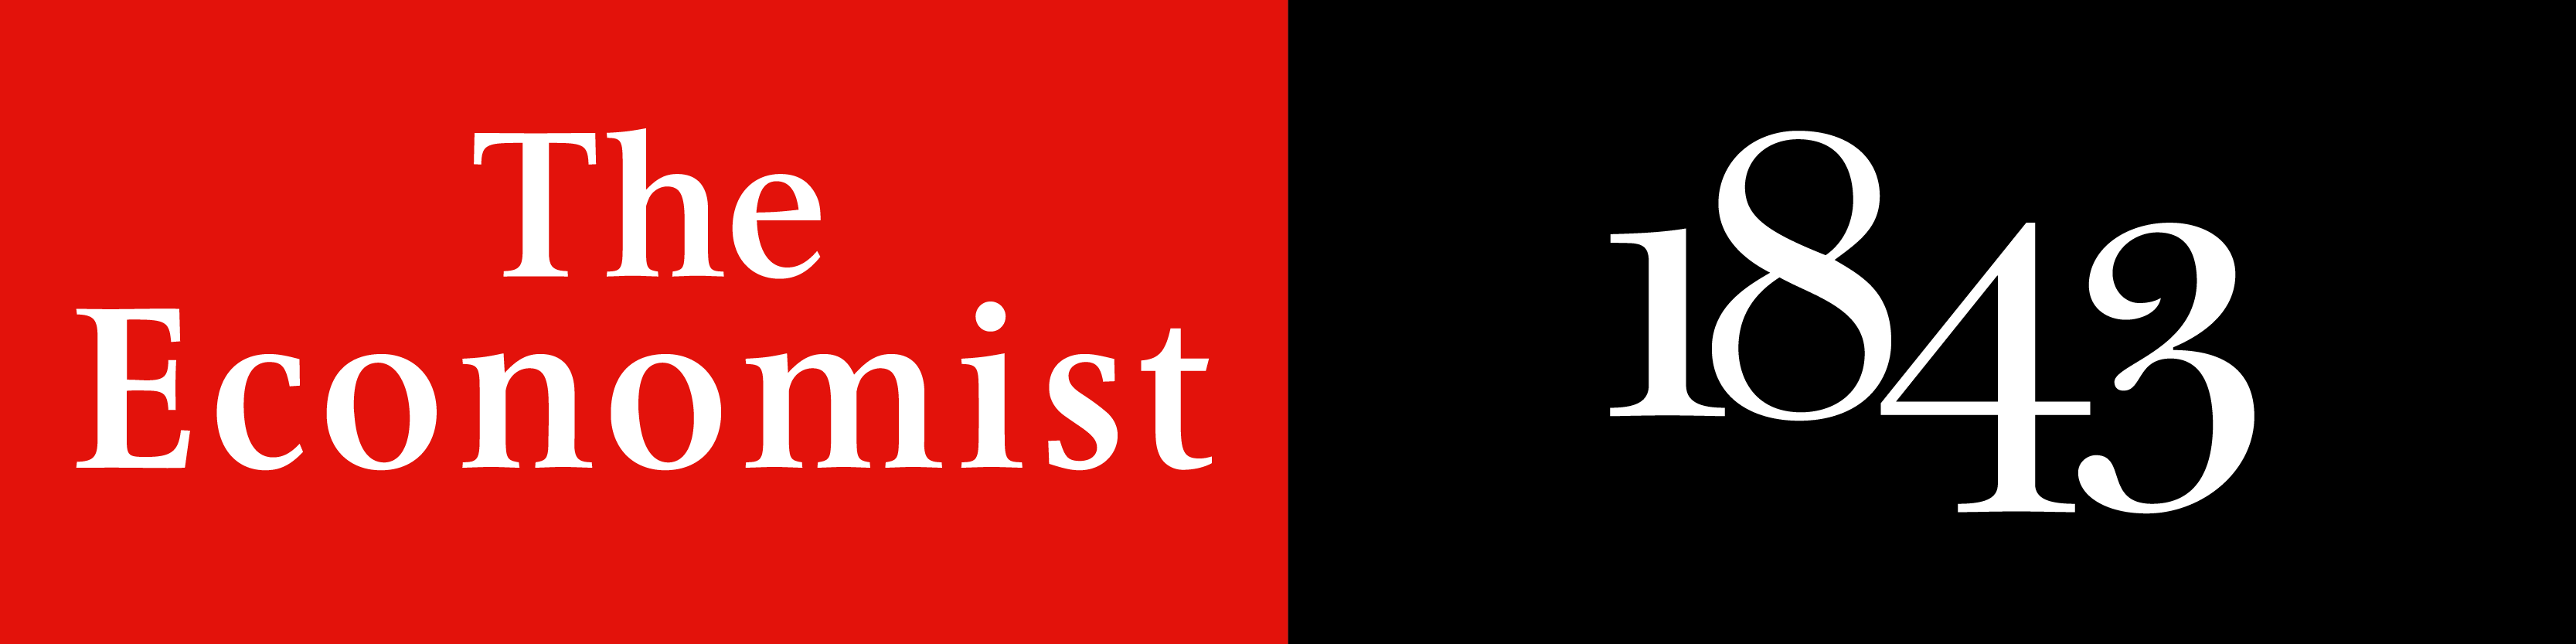 Economist.com Logo - The Economist Group: Media information